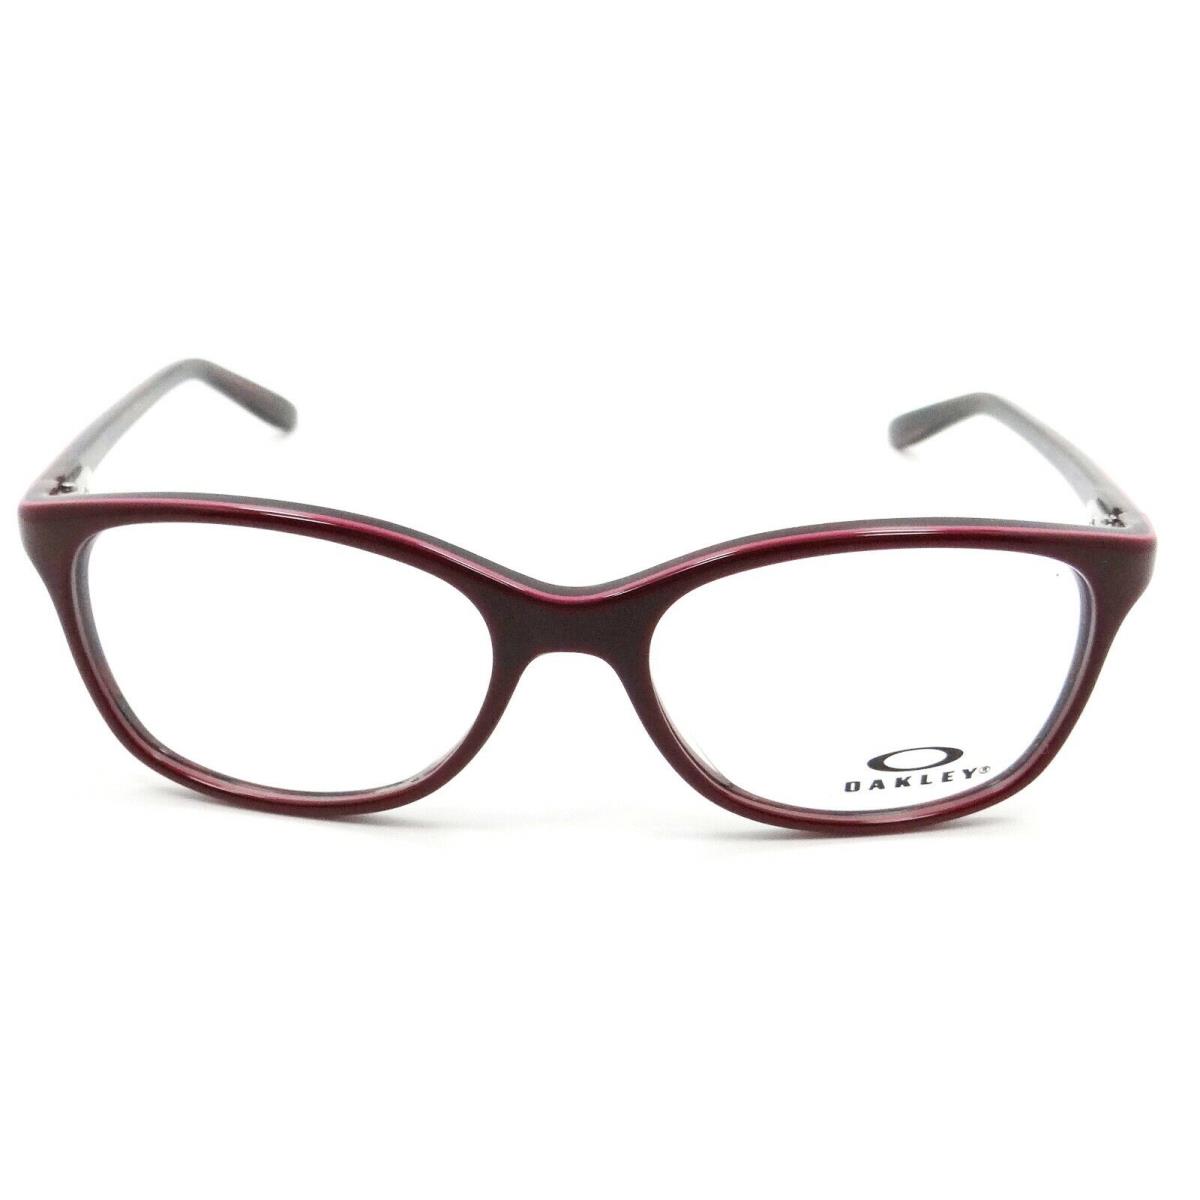 Oakley eyeglasses  - Multicolor Frame